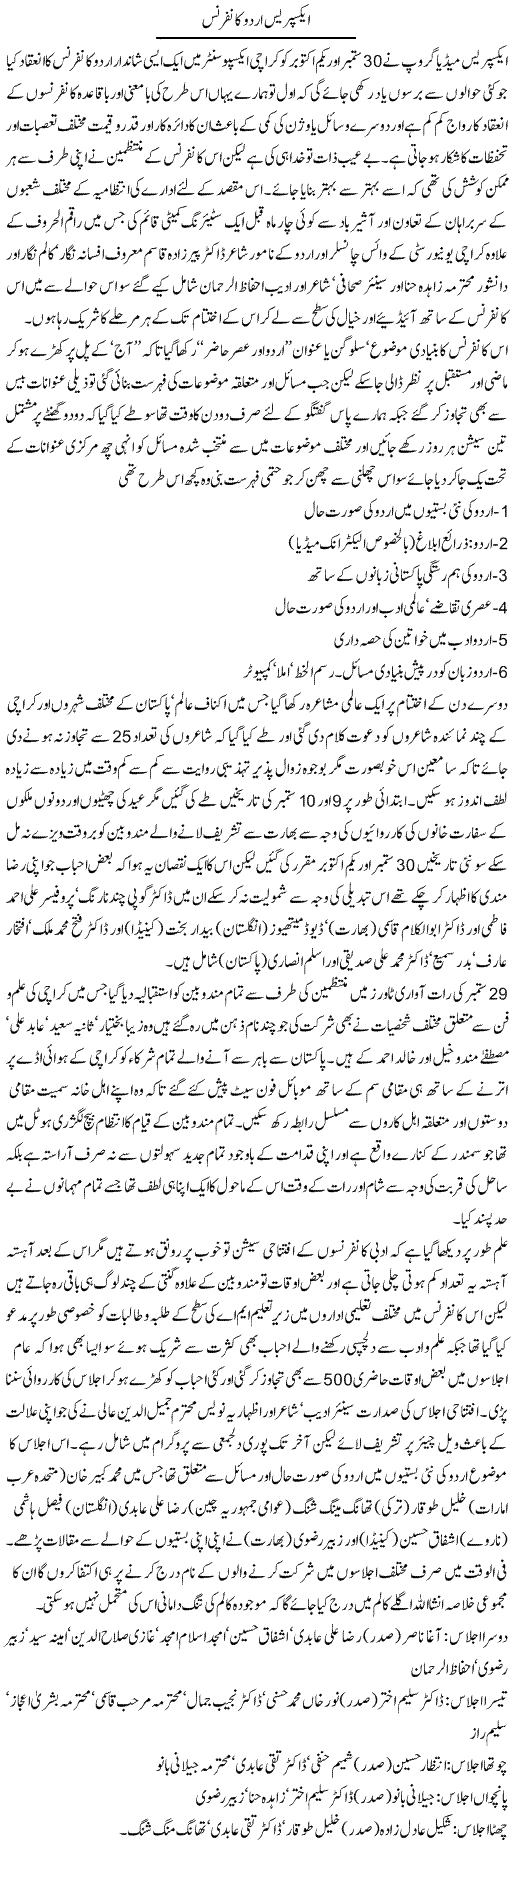 Urdu Conference Express Column Amjad Islam 6 October 2011